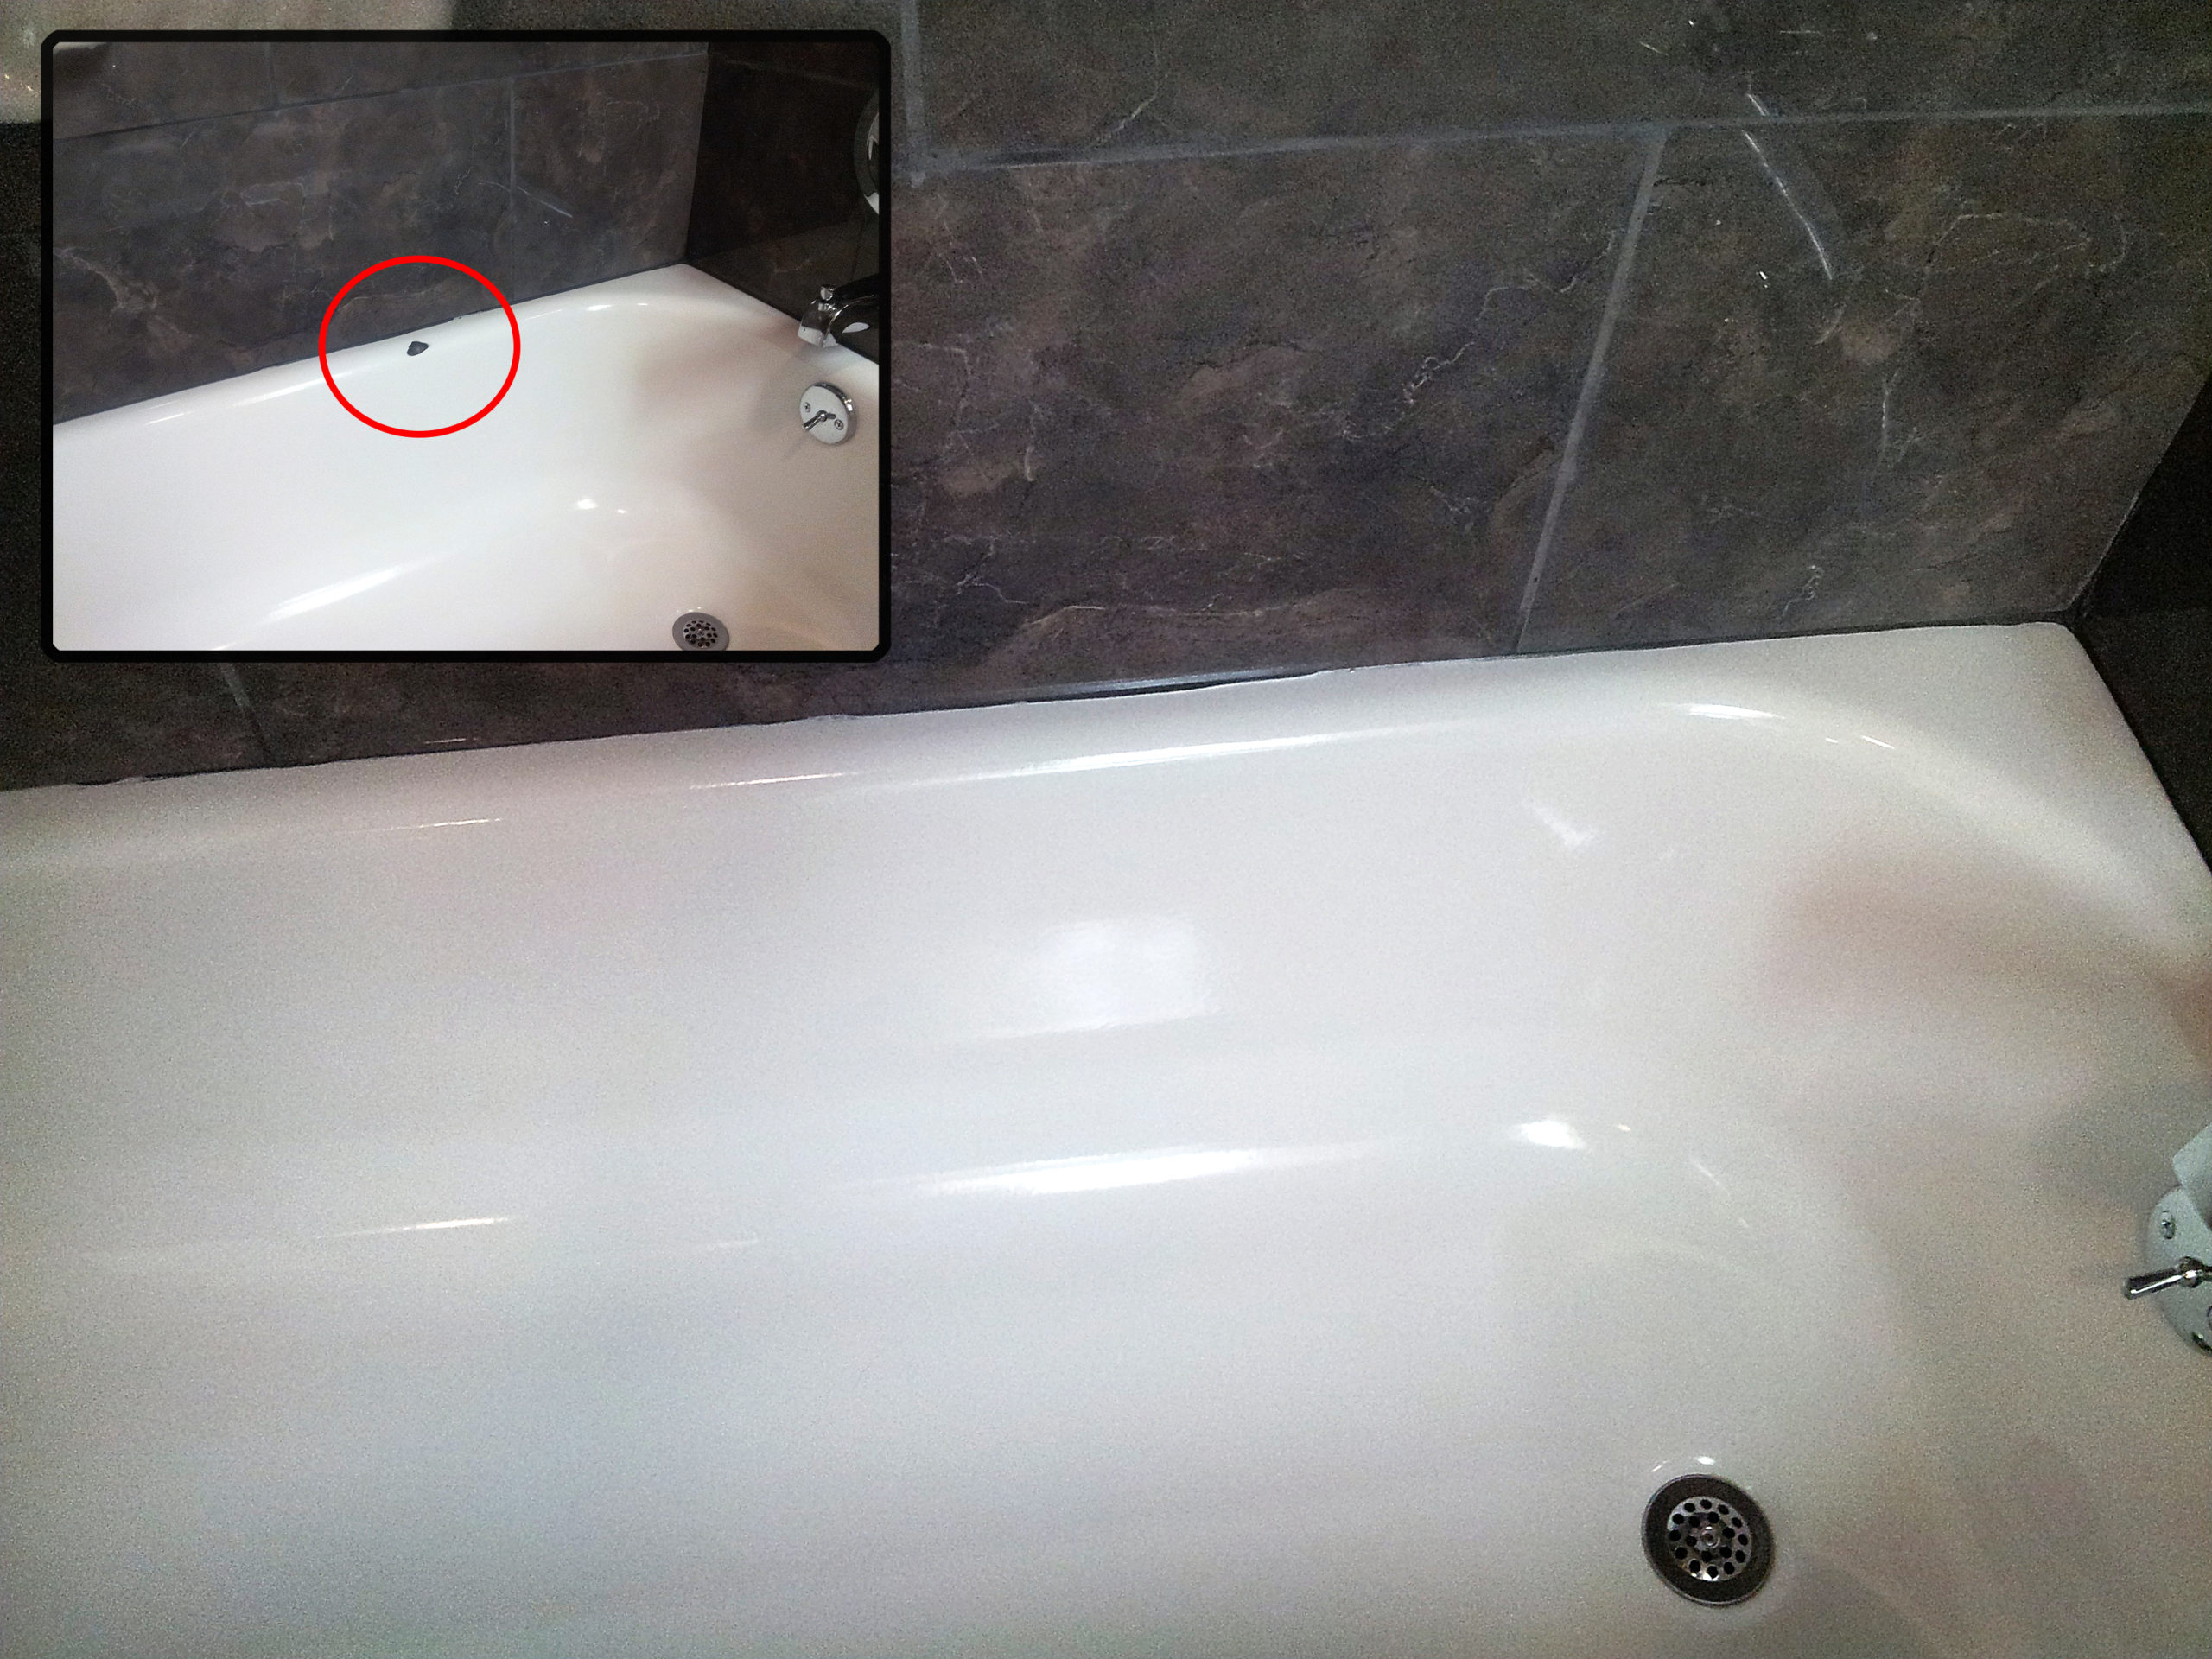 Contractor's error on bathtub